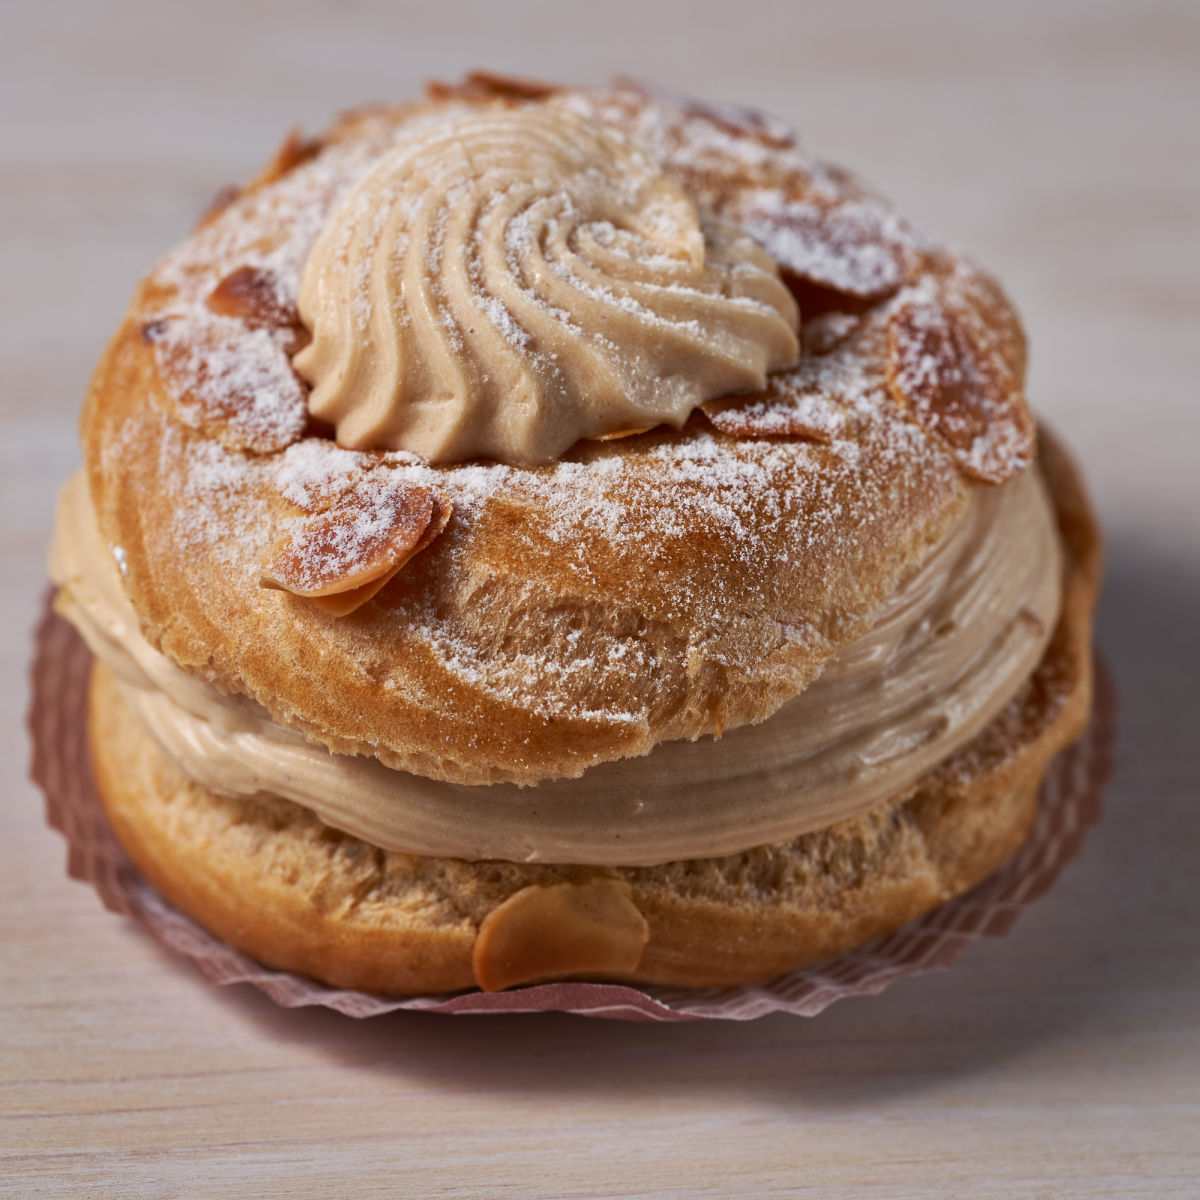 Mocha Cream Puffs - kavos skonio "Choix" pyragaičių desertas